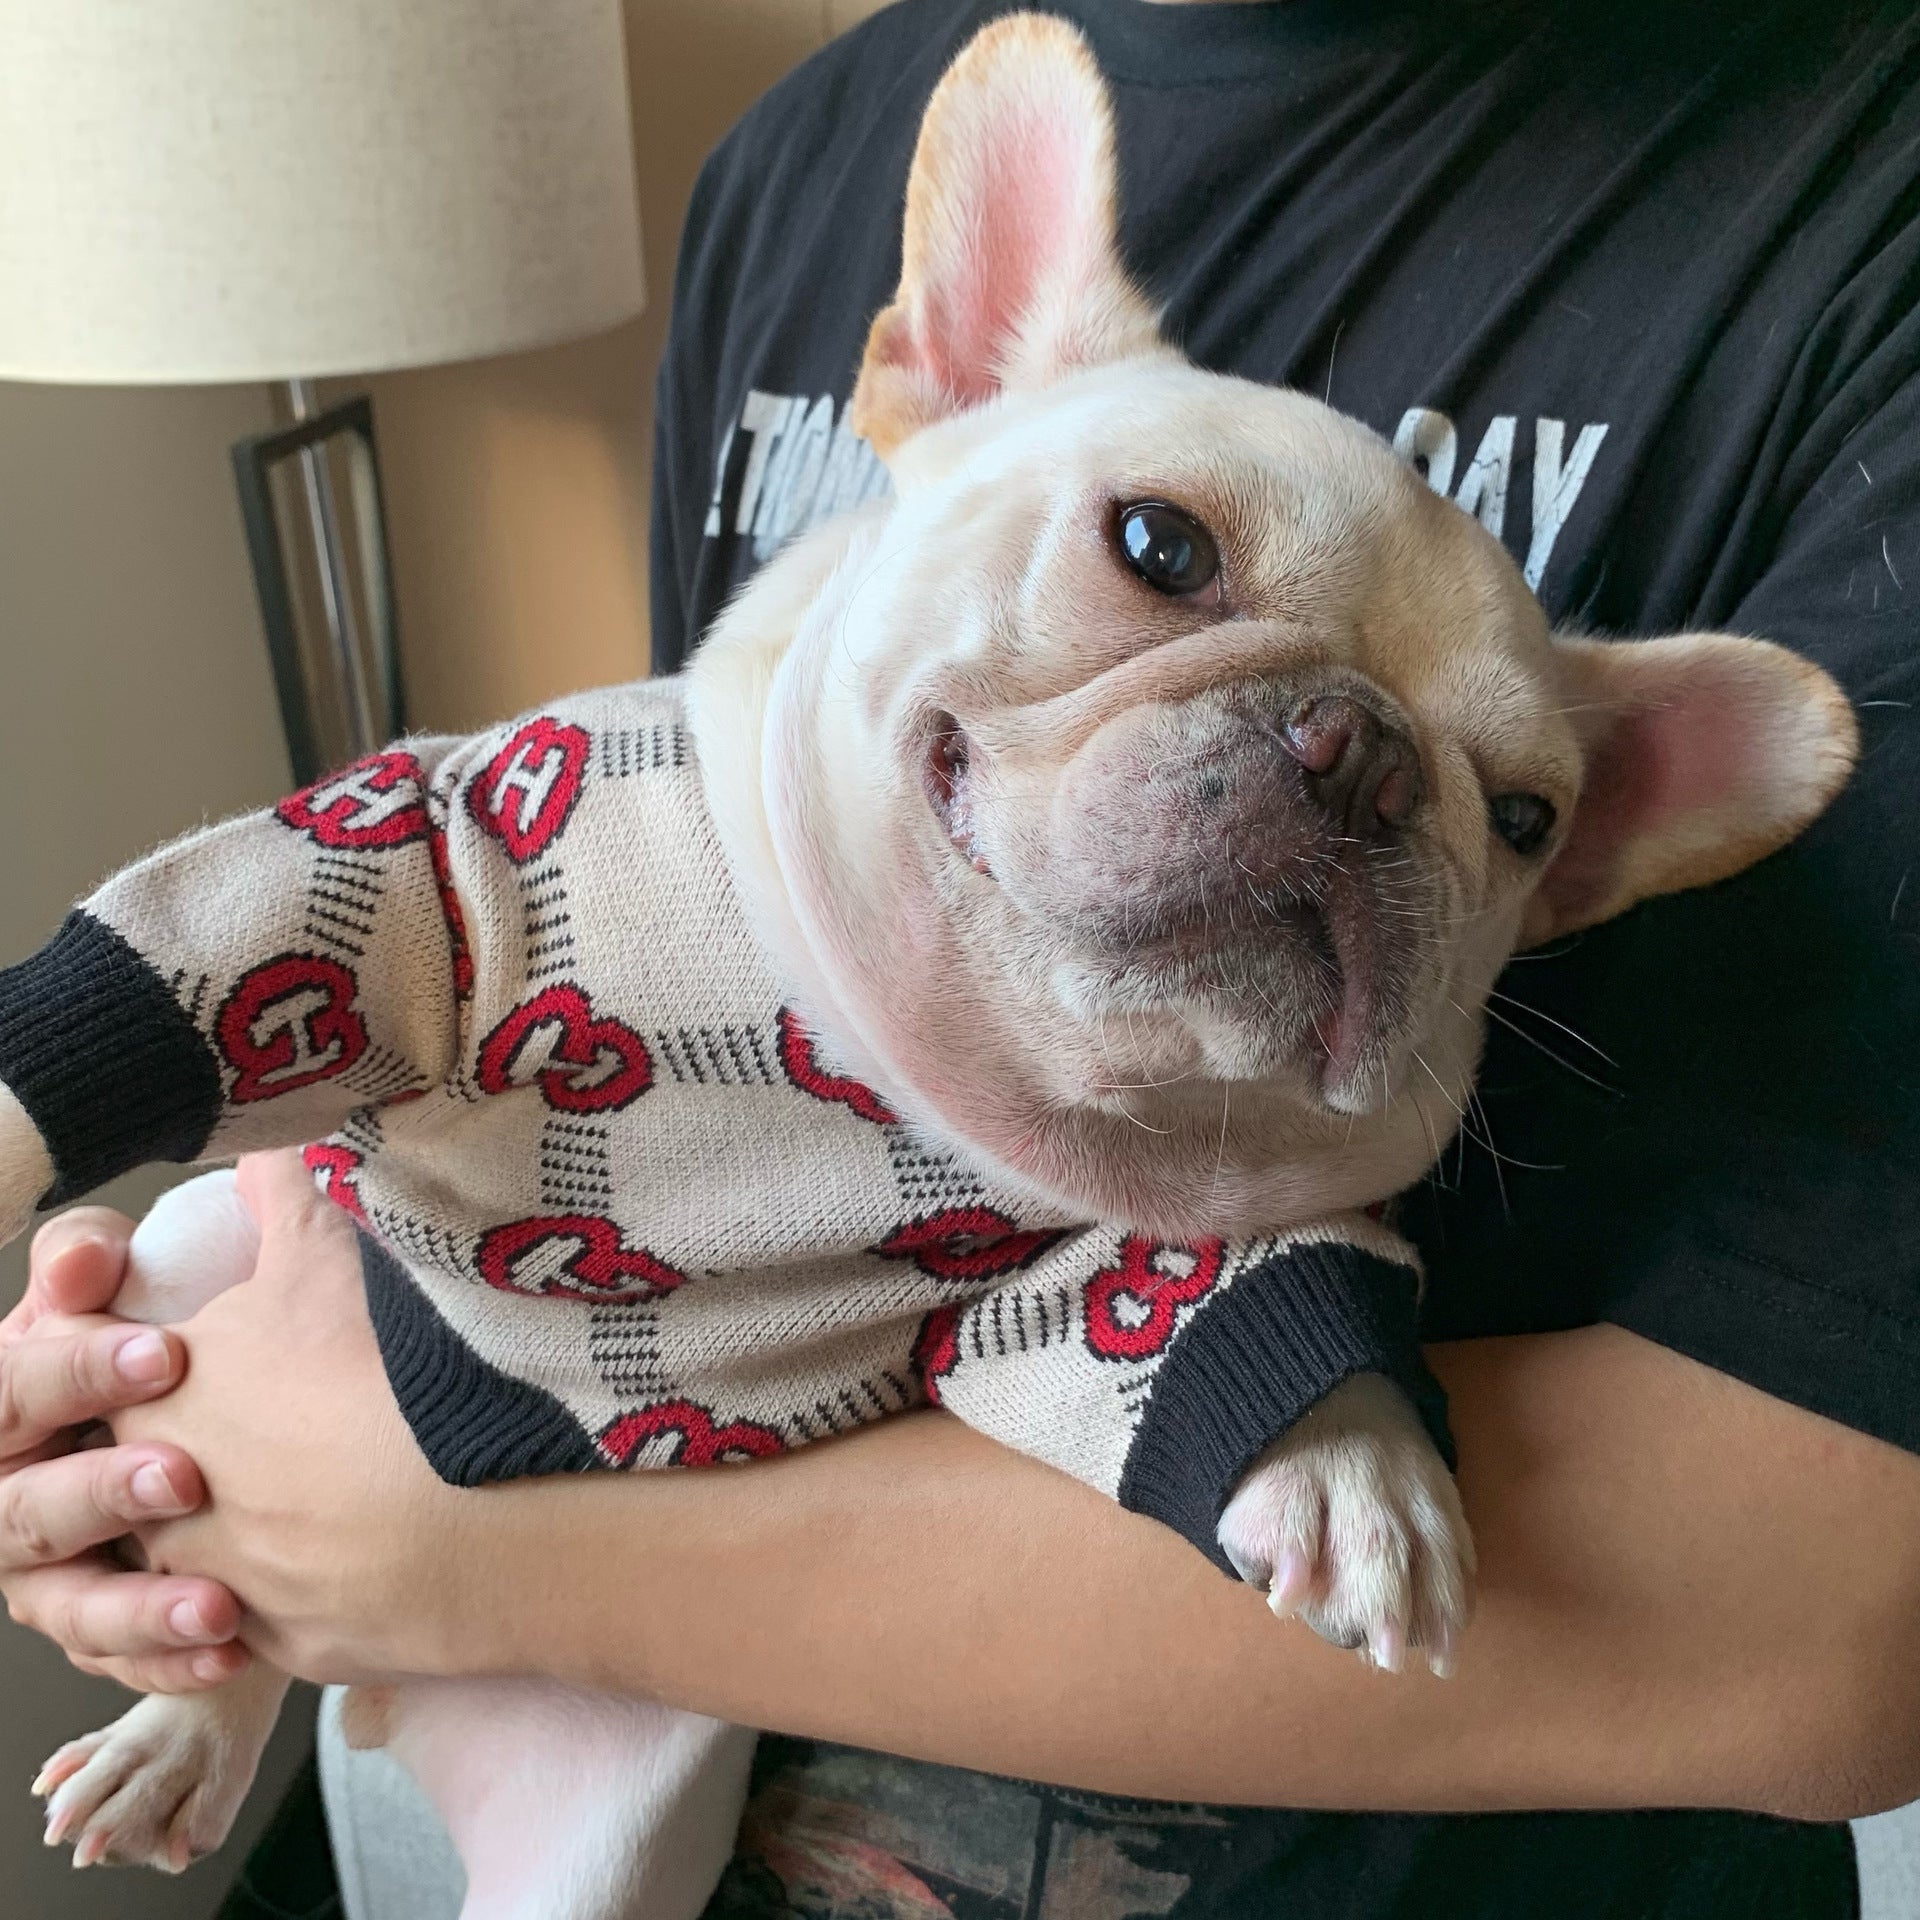 Vintage-Inspired French Bulldog Sweater dog cloth